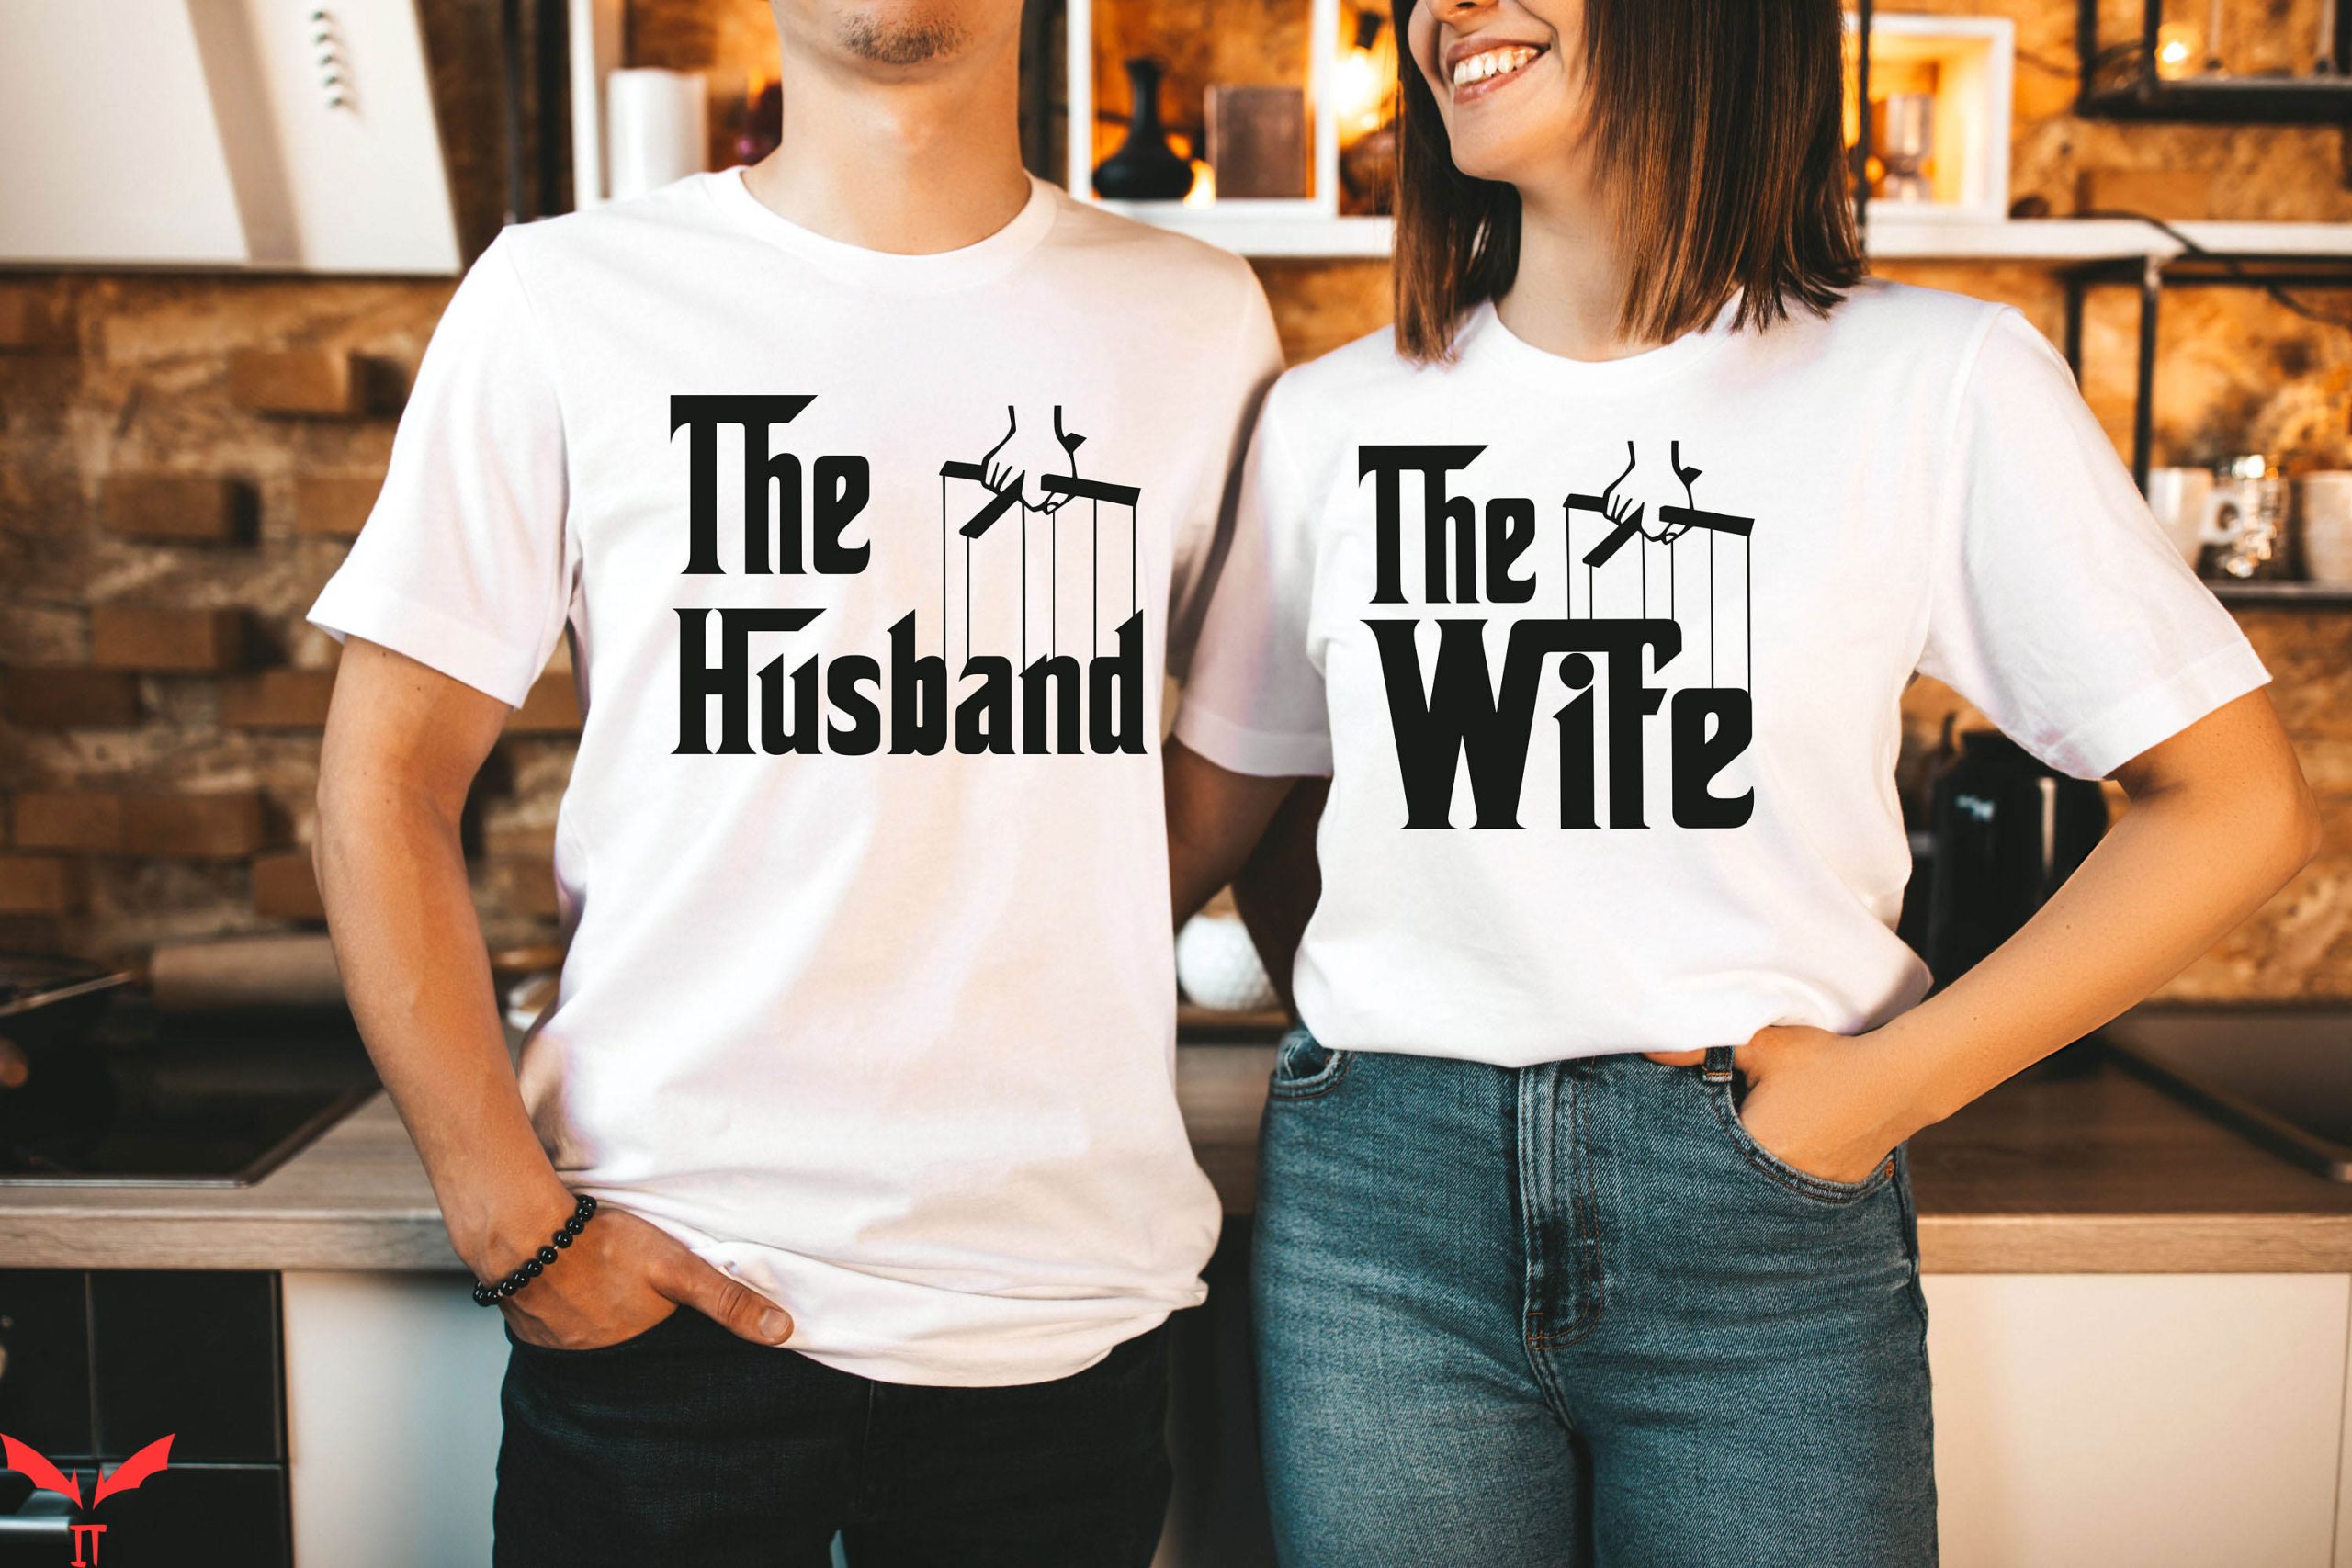 Matching Husband And Wife T-Shirt Couples Matching Shirt